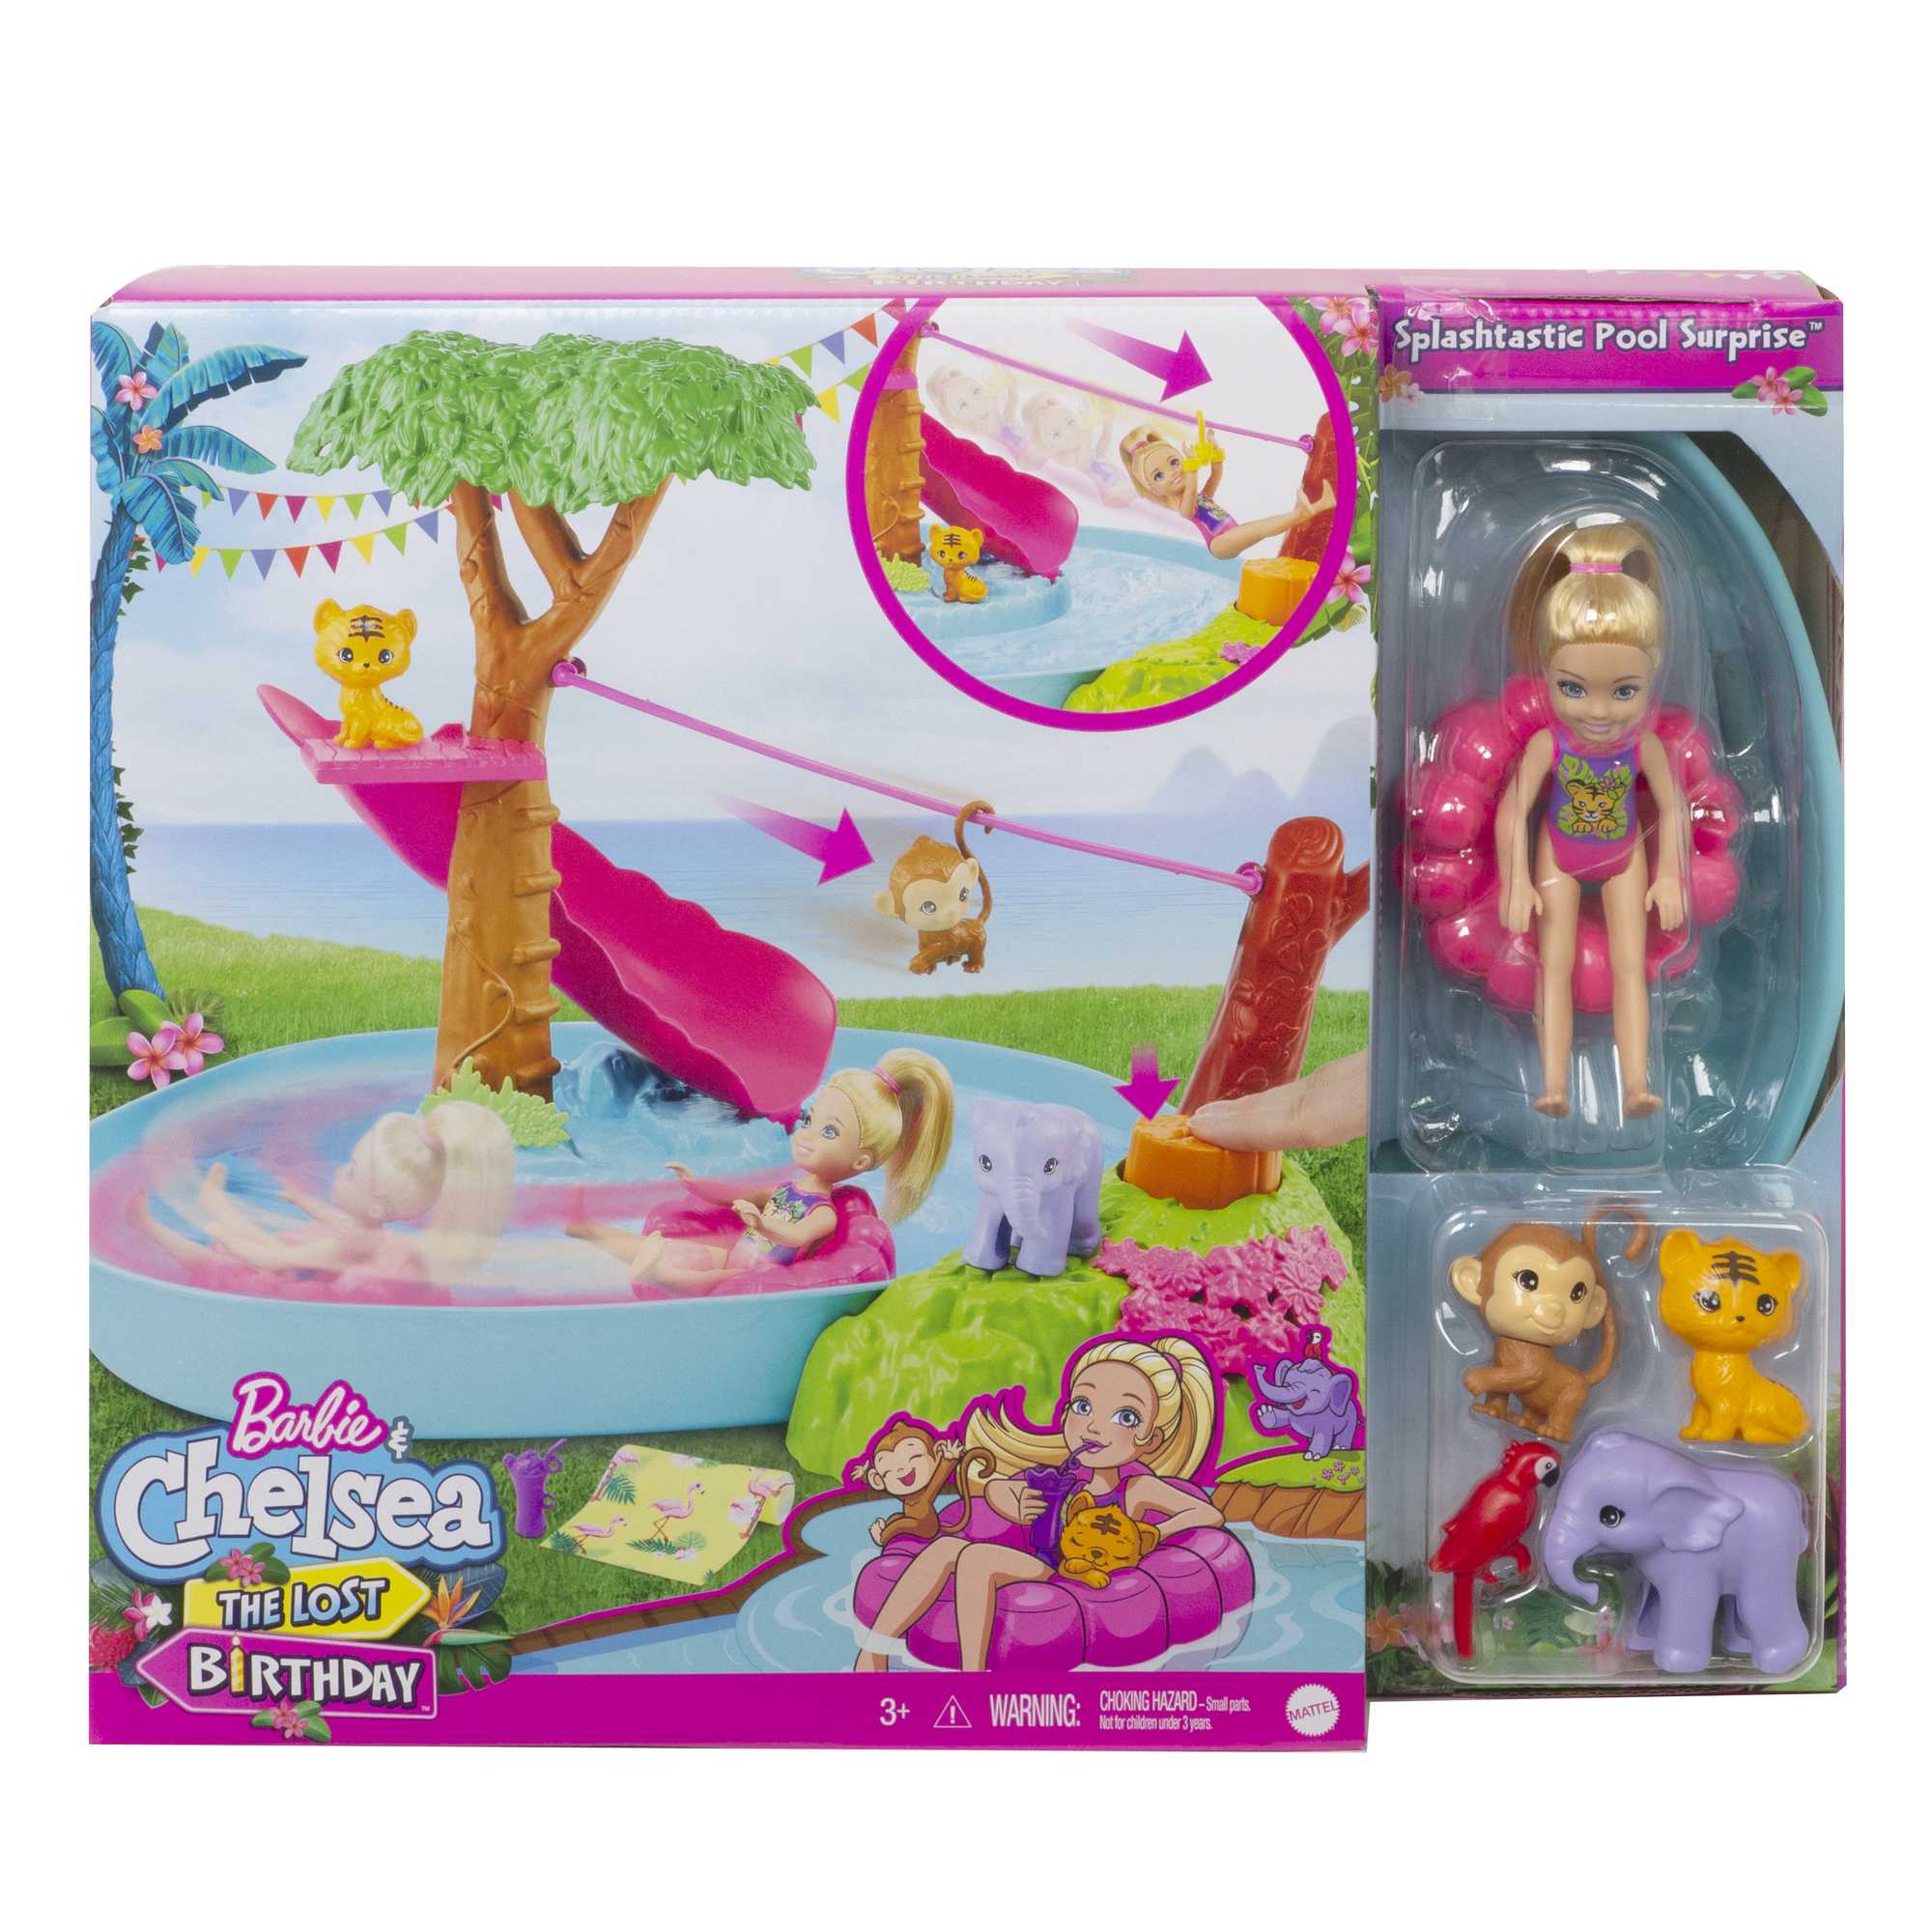 Barbie And Chelsea The Lost Birthday Splashtastic Pool Surprise Playset |  Mattel